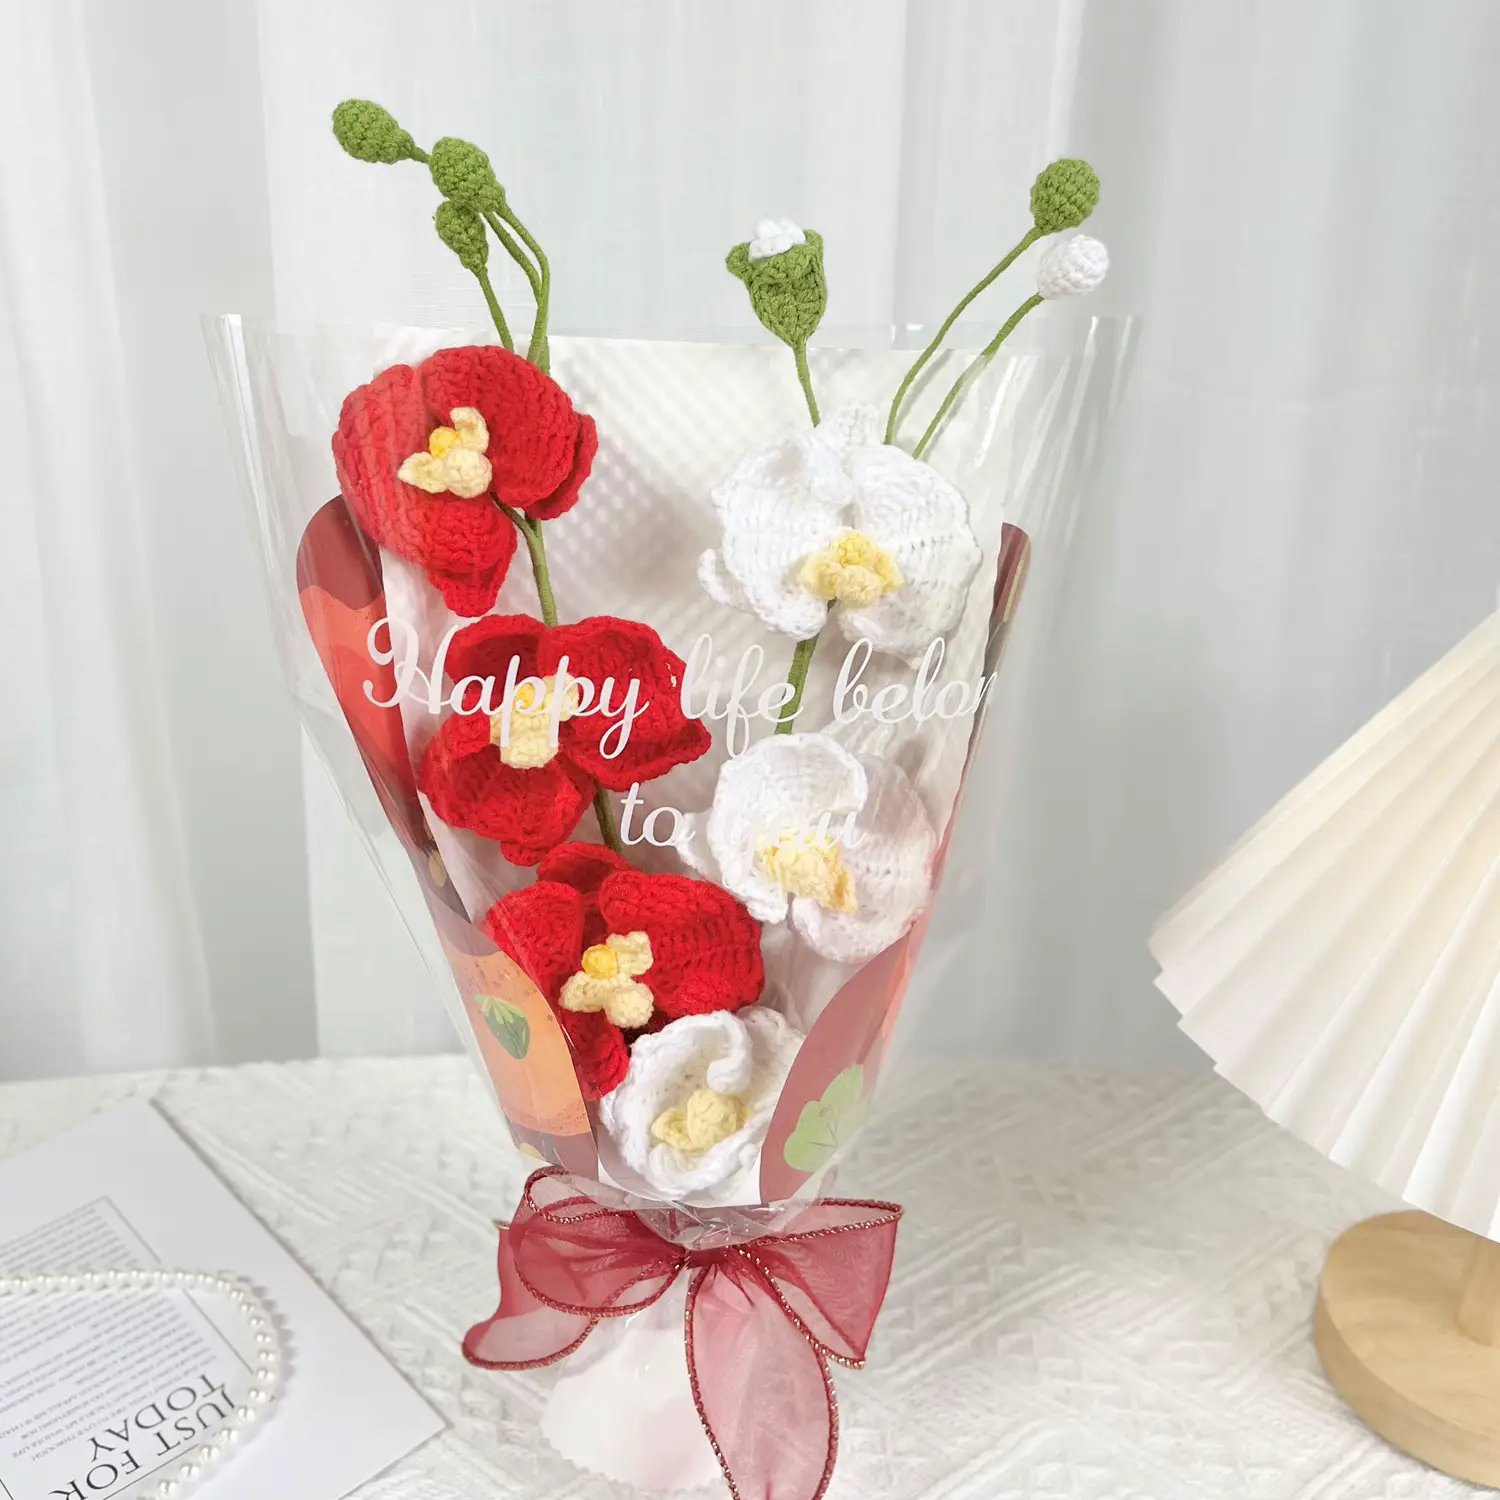 Handmade diy ribbon rose flowers #handmade #handmadegifts #flowers